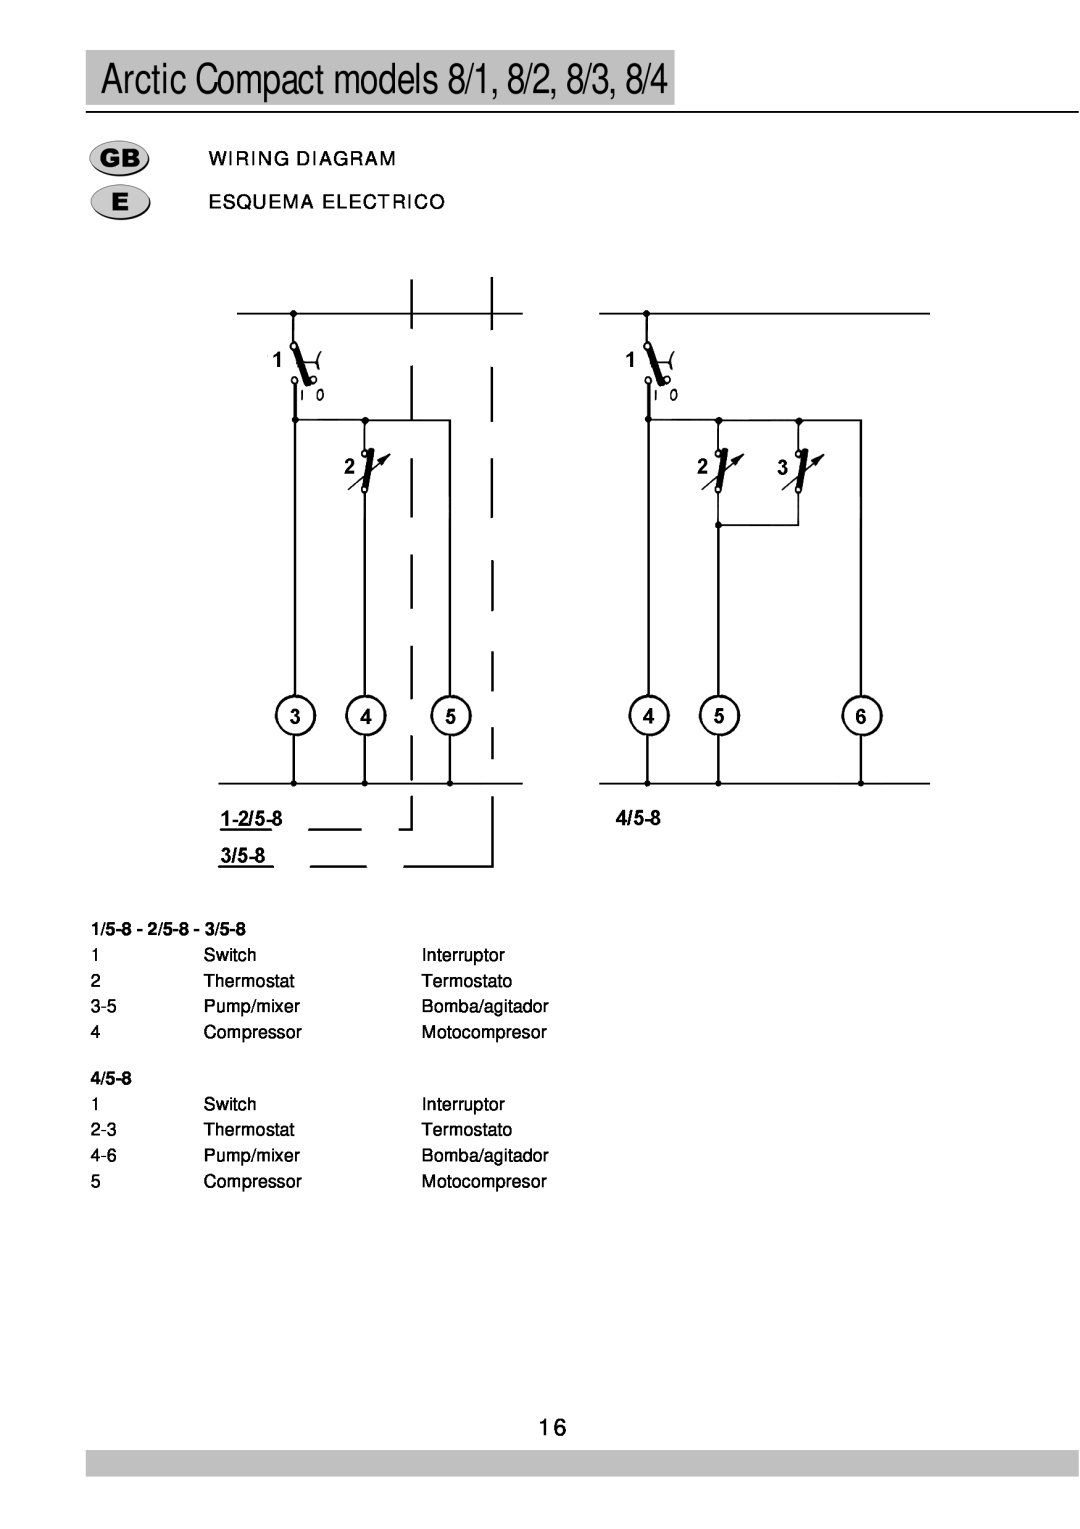 Cecilware manual Arctic Compact models 8/1, 8/2, 8/3, 8/4, Wiring Diagram Esquema Electrico, 1/5-8- 2/5-8- 3/5-8, 4/5-8 